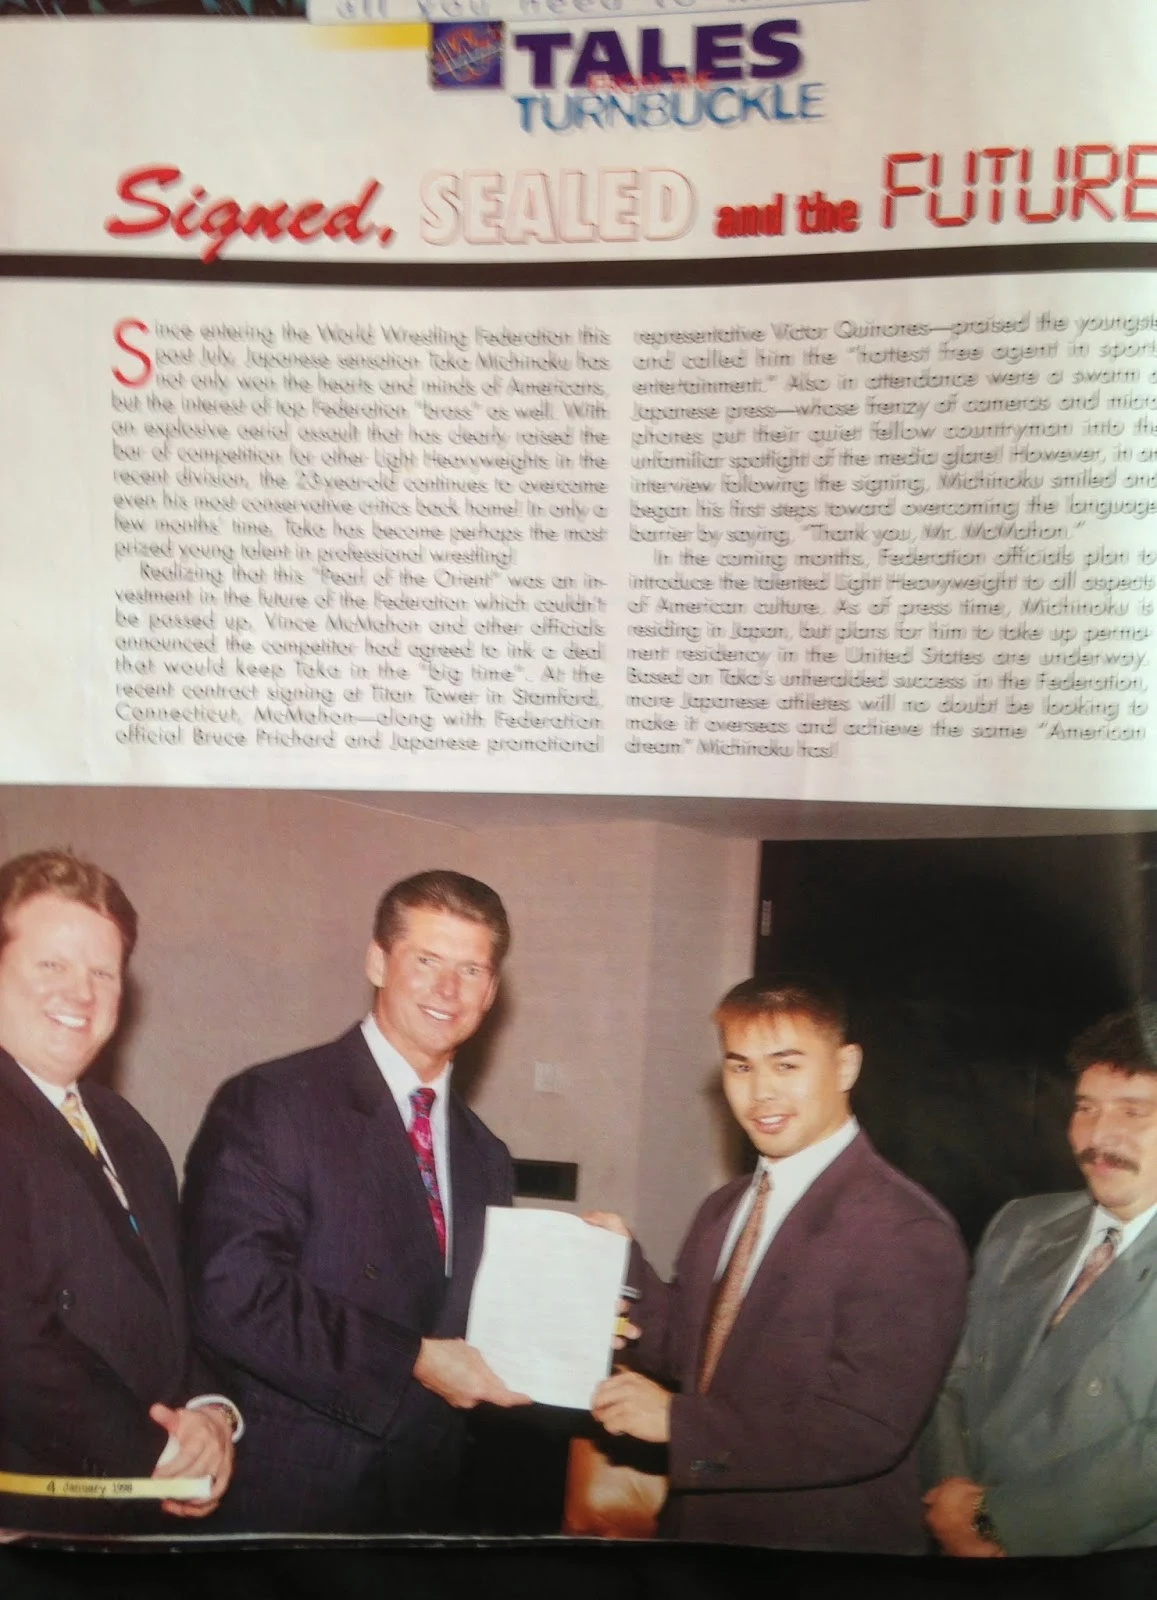 WWF MAGAZINE - JANUARY 1998 - Taka Michinoku signs with the World Wrestling Federation